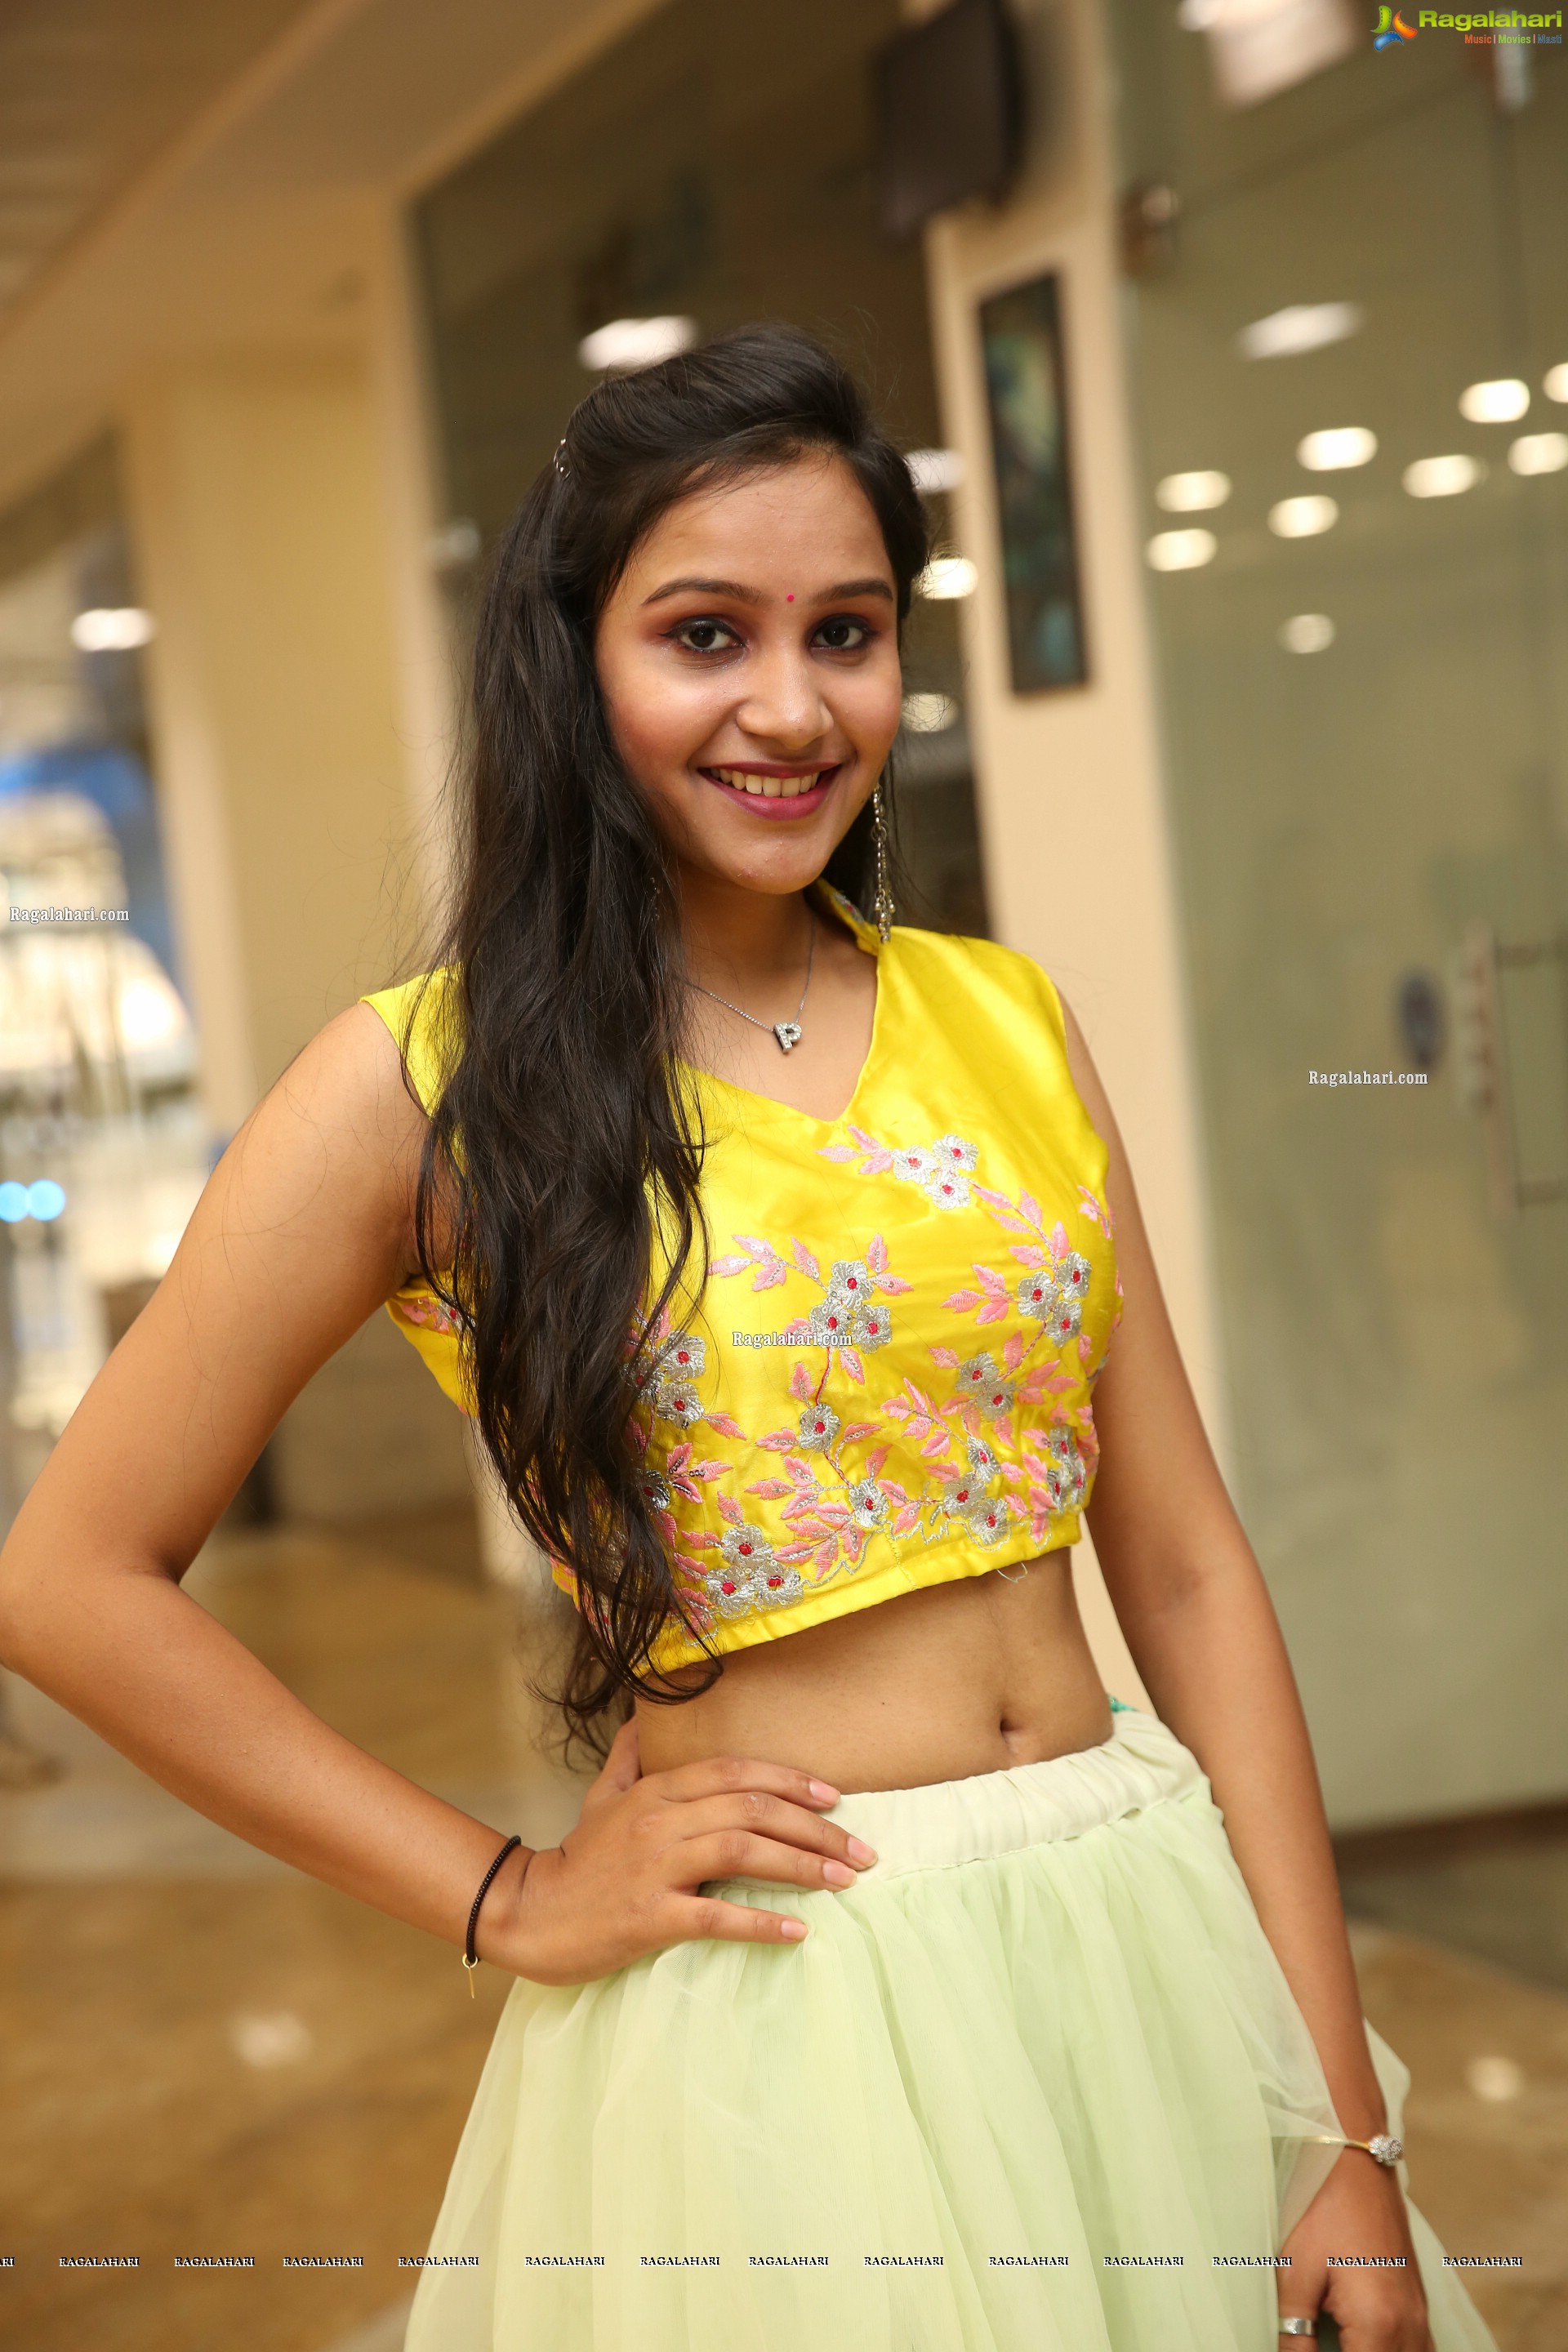 Priyancee Agarwal in Pastel Green Ruffle Lehenga and Yellow Crop Top, HD Photo Gallery